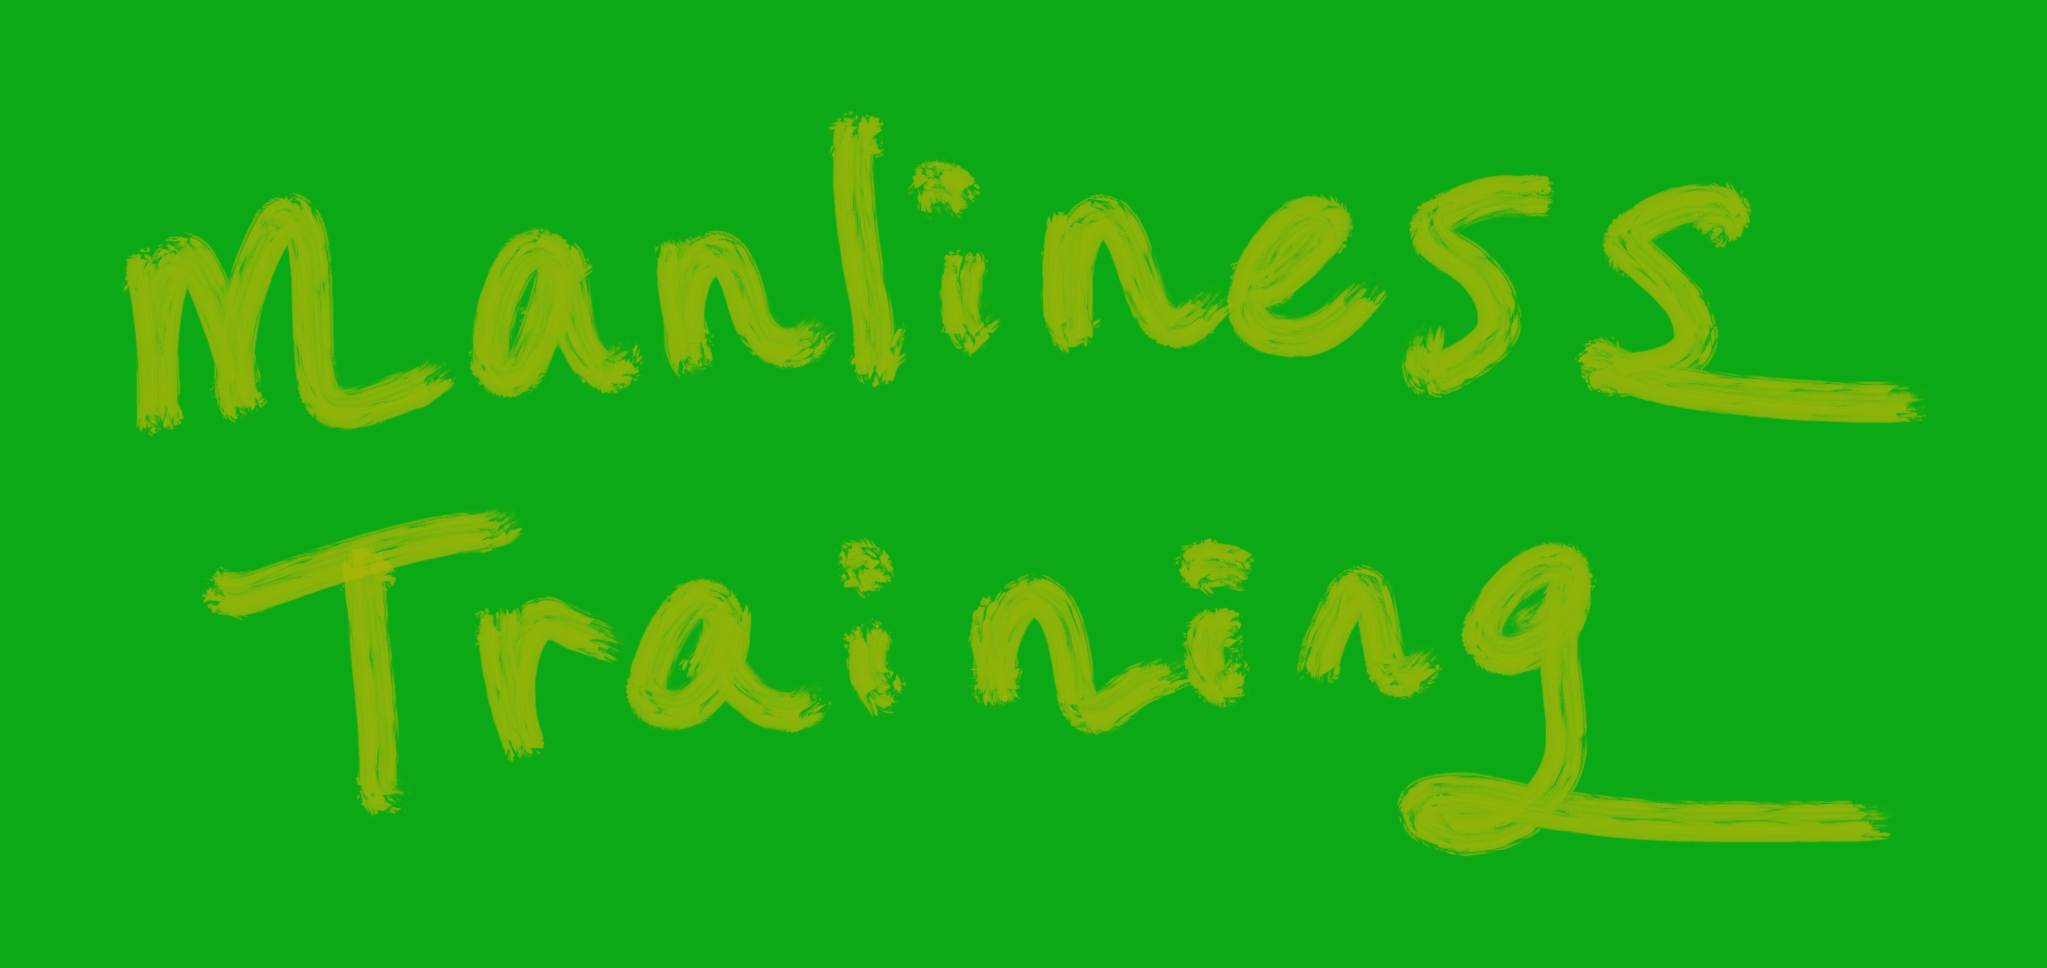 Manliness Training logo